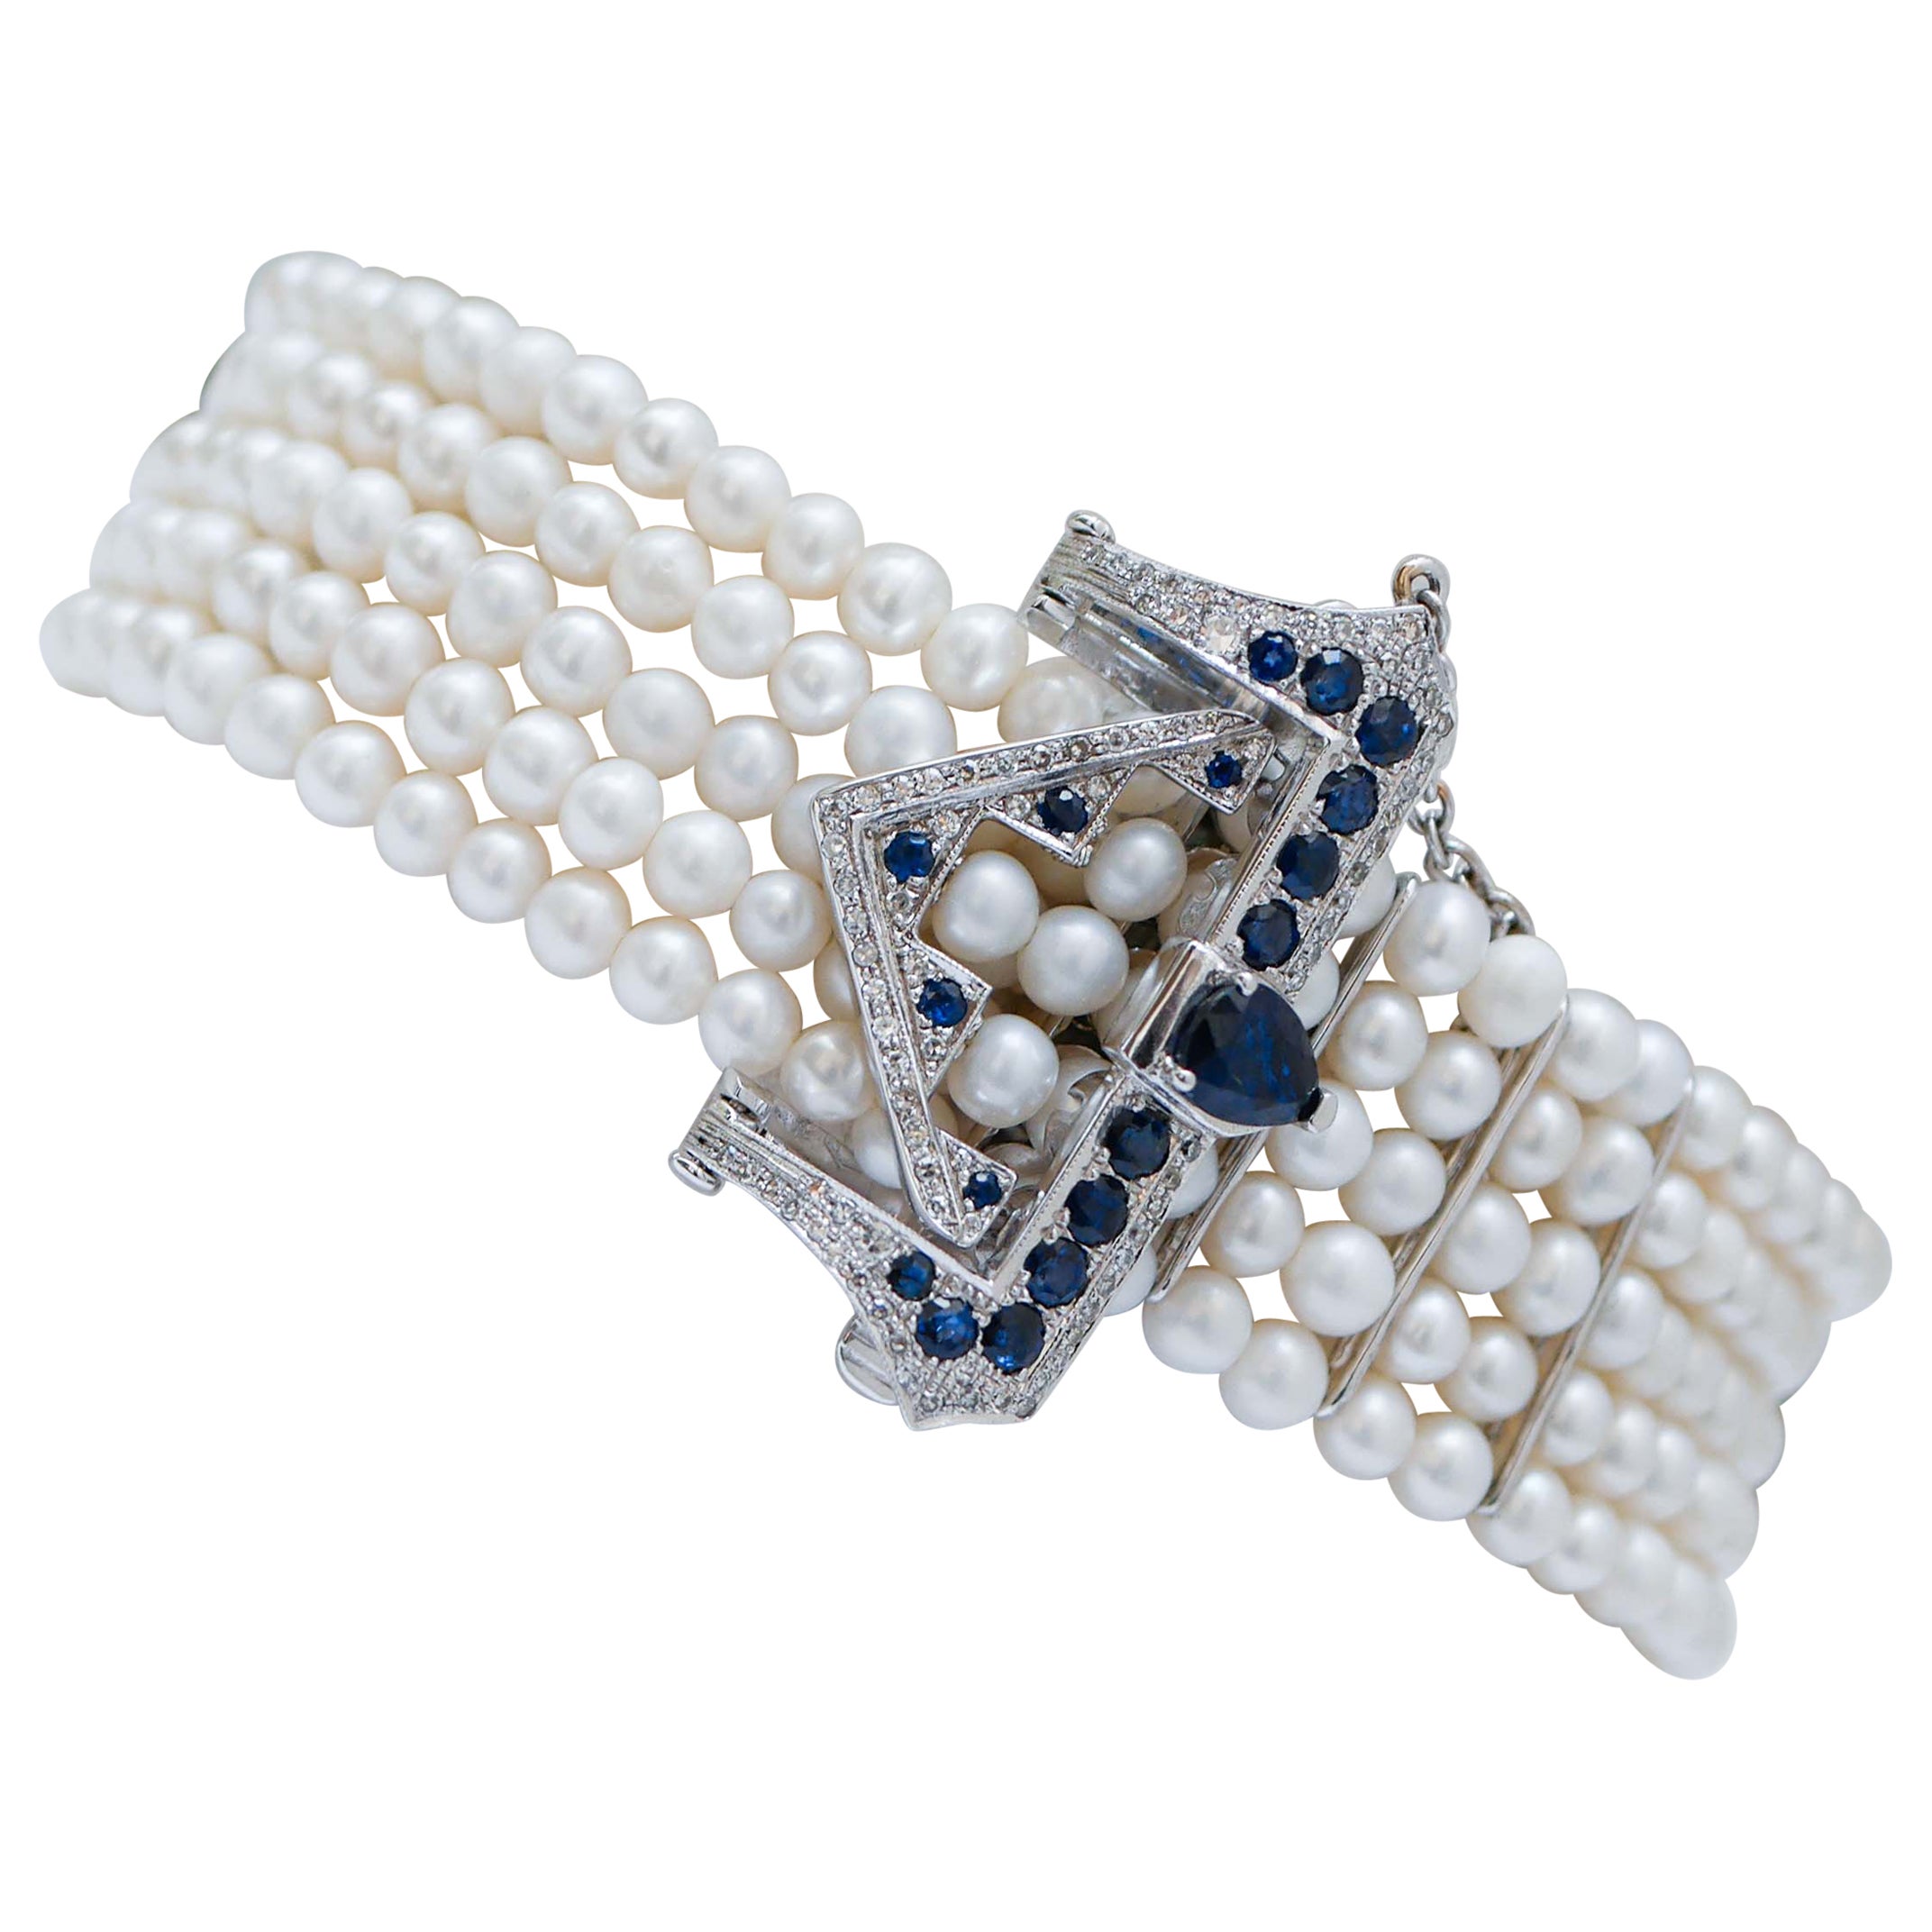 Pearls, Sapphires, Diamonds, 14 Kt White Gold Bracelet. For Sale